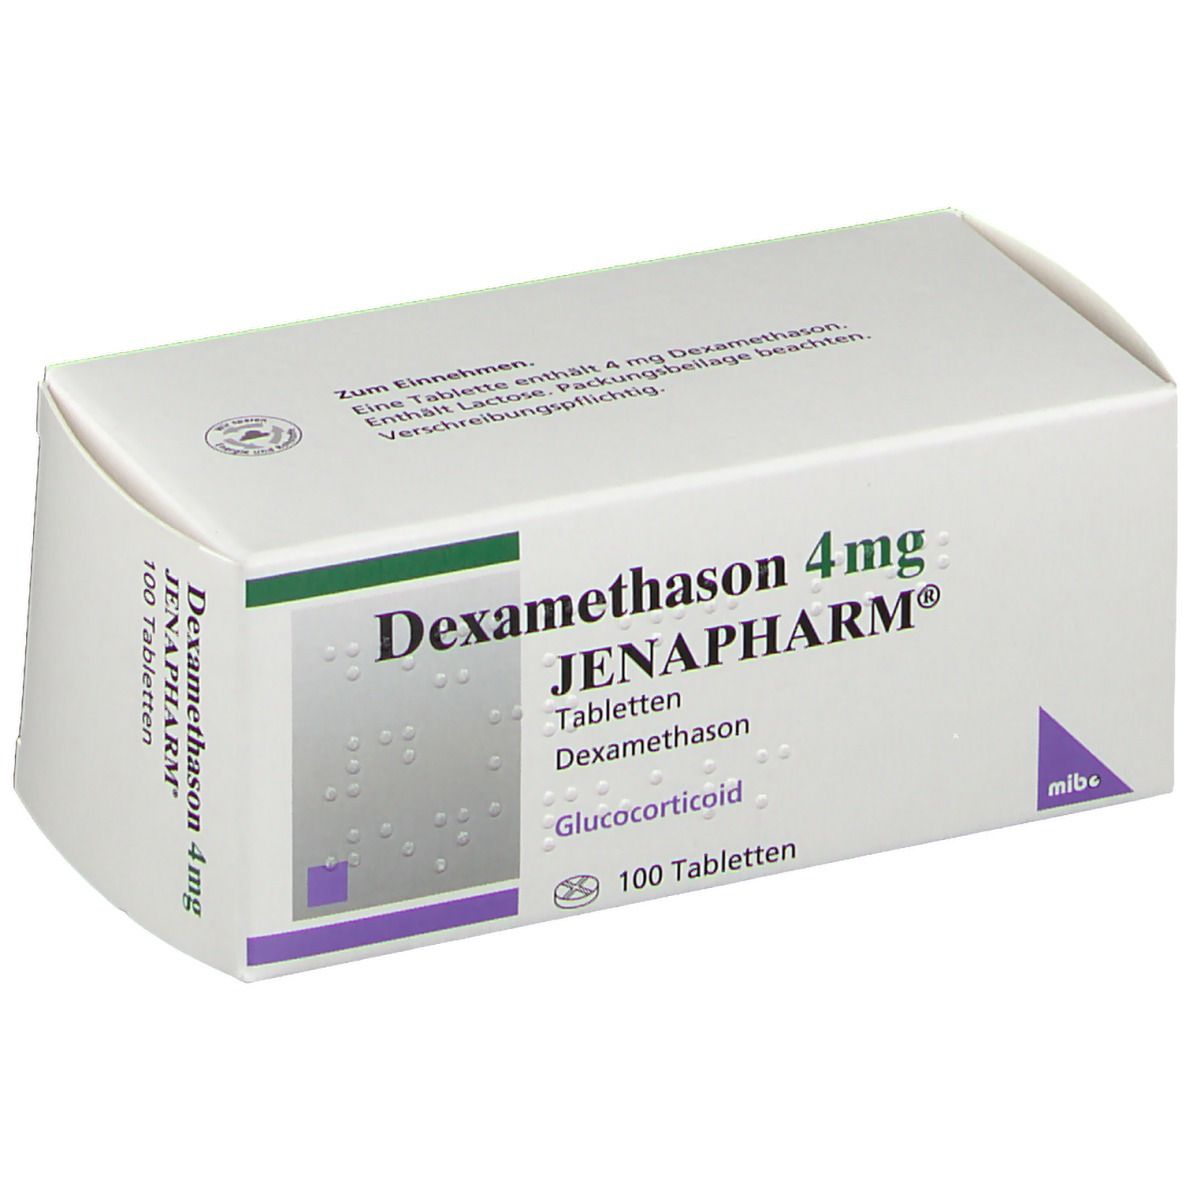 Dexamethason 4 mg Jenapharm